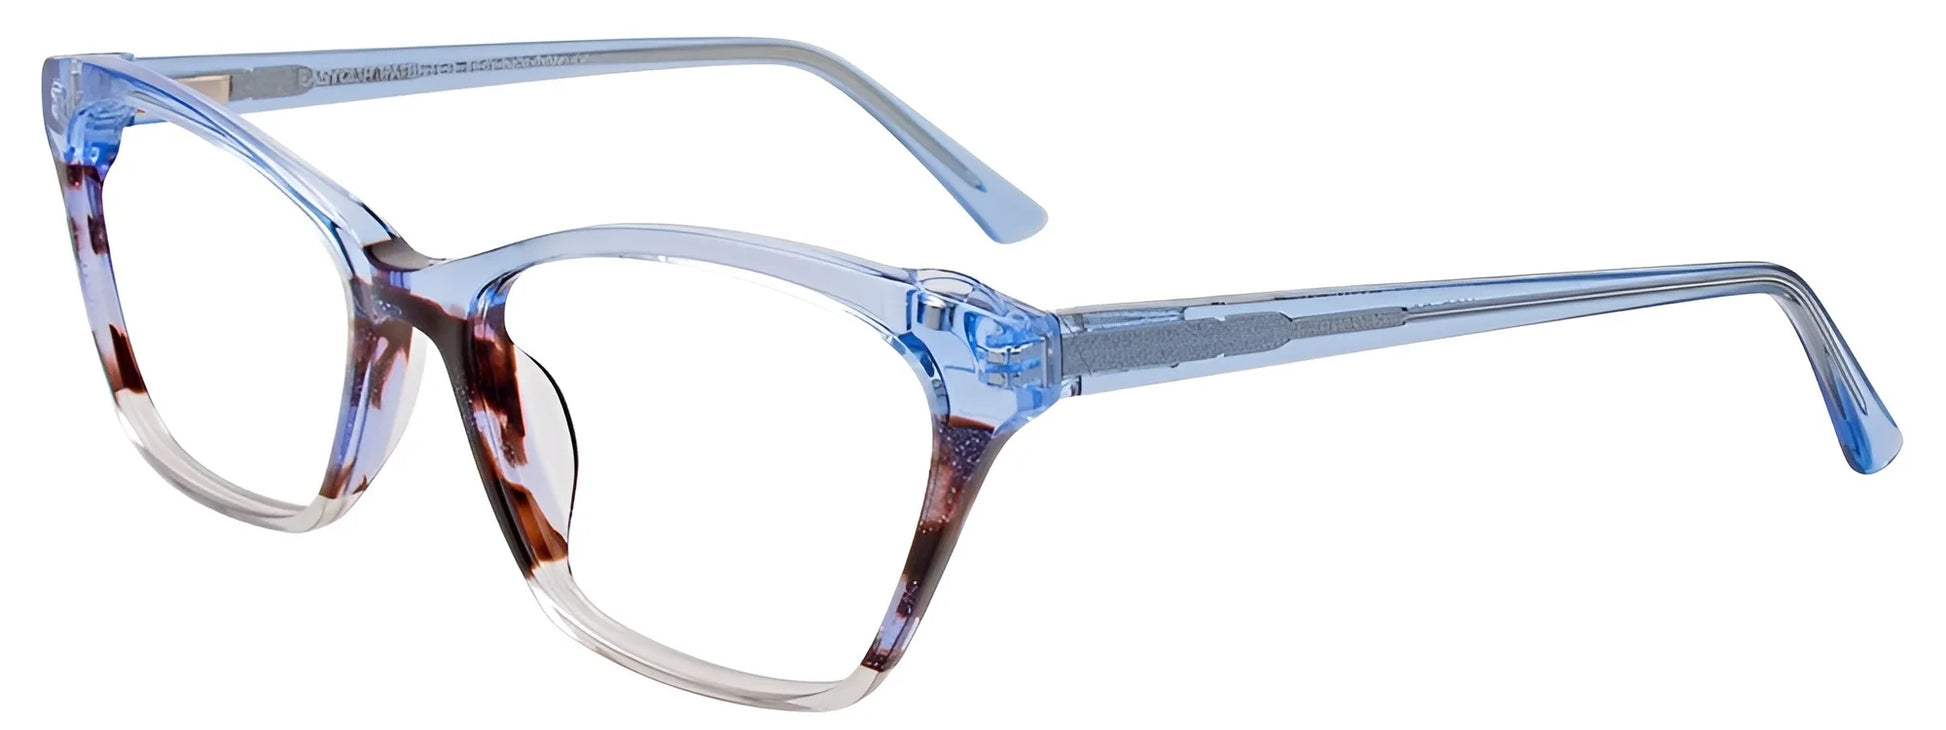 EasyClip EC542 Eyeglasses Crystal Light Blue / Marbled Dark Brown / Light Blue